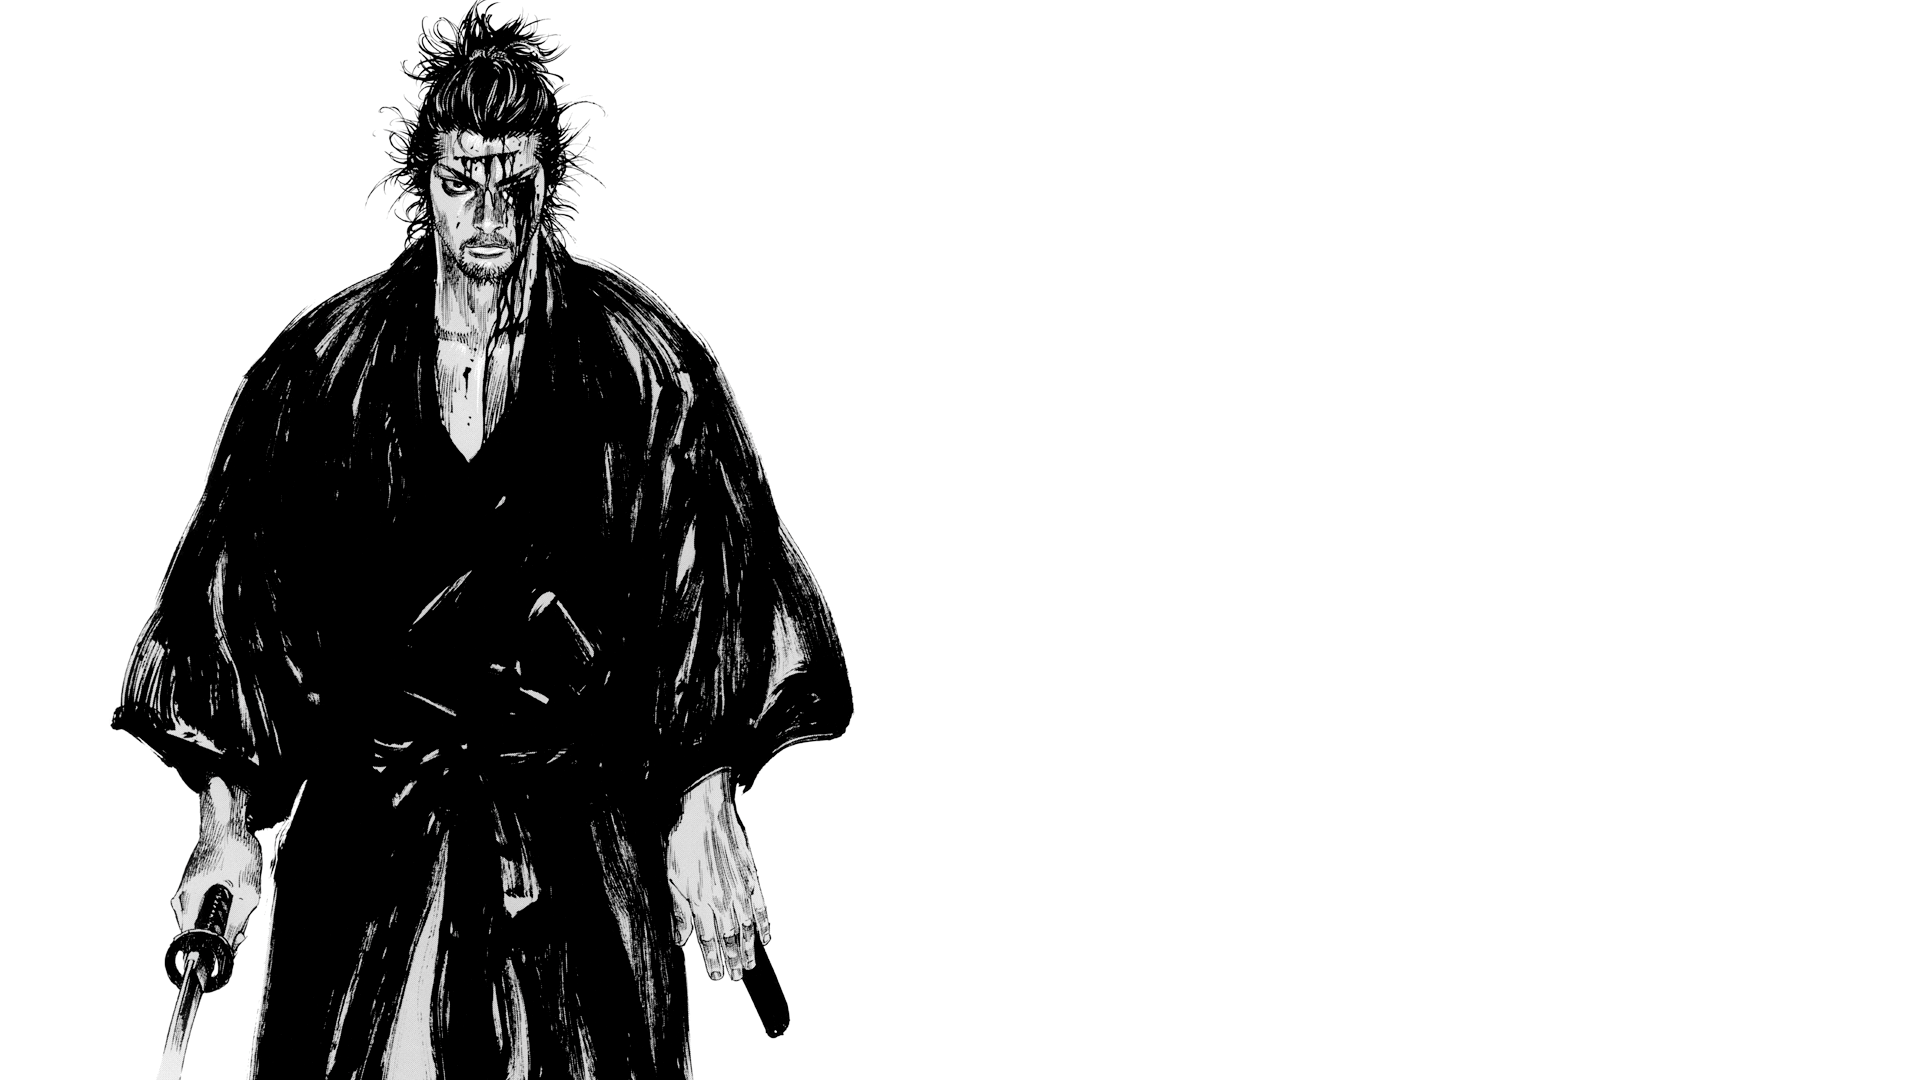 Wallpaper id vagabond samurai miyamoto musashi japan kimono simple background manga monochrome katana free download